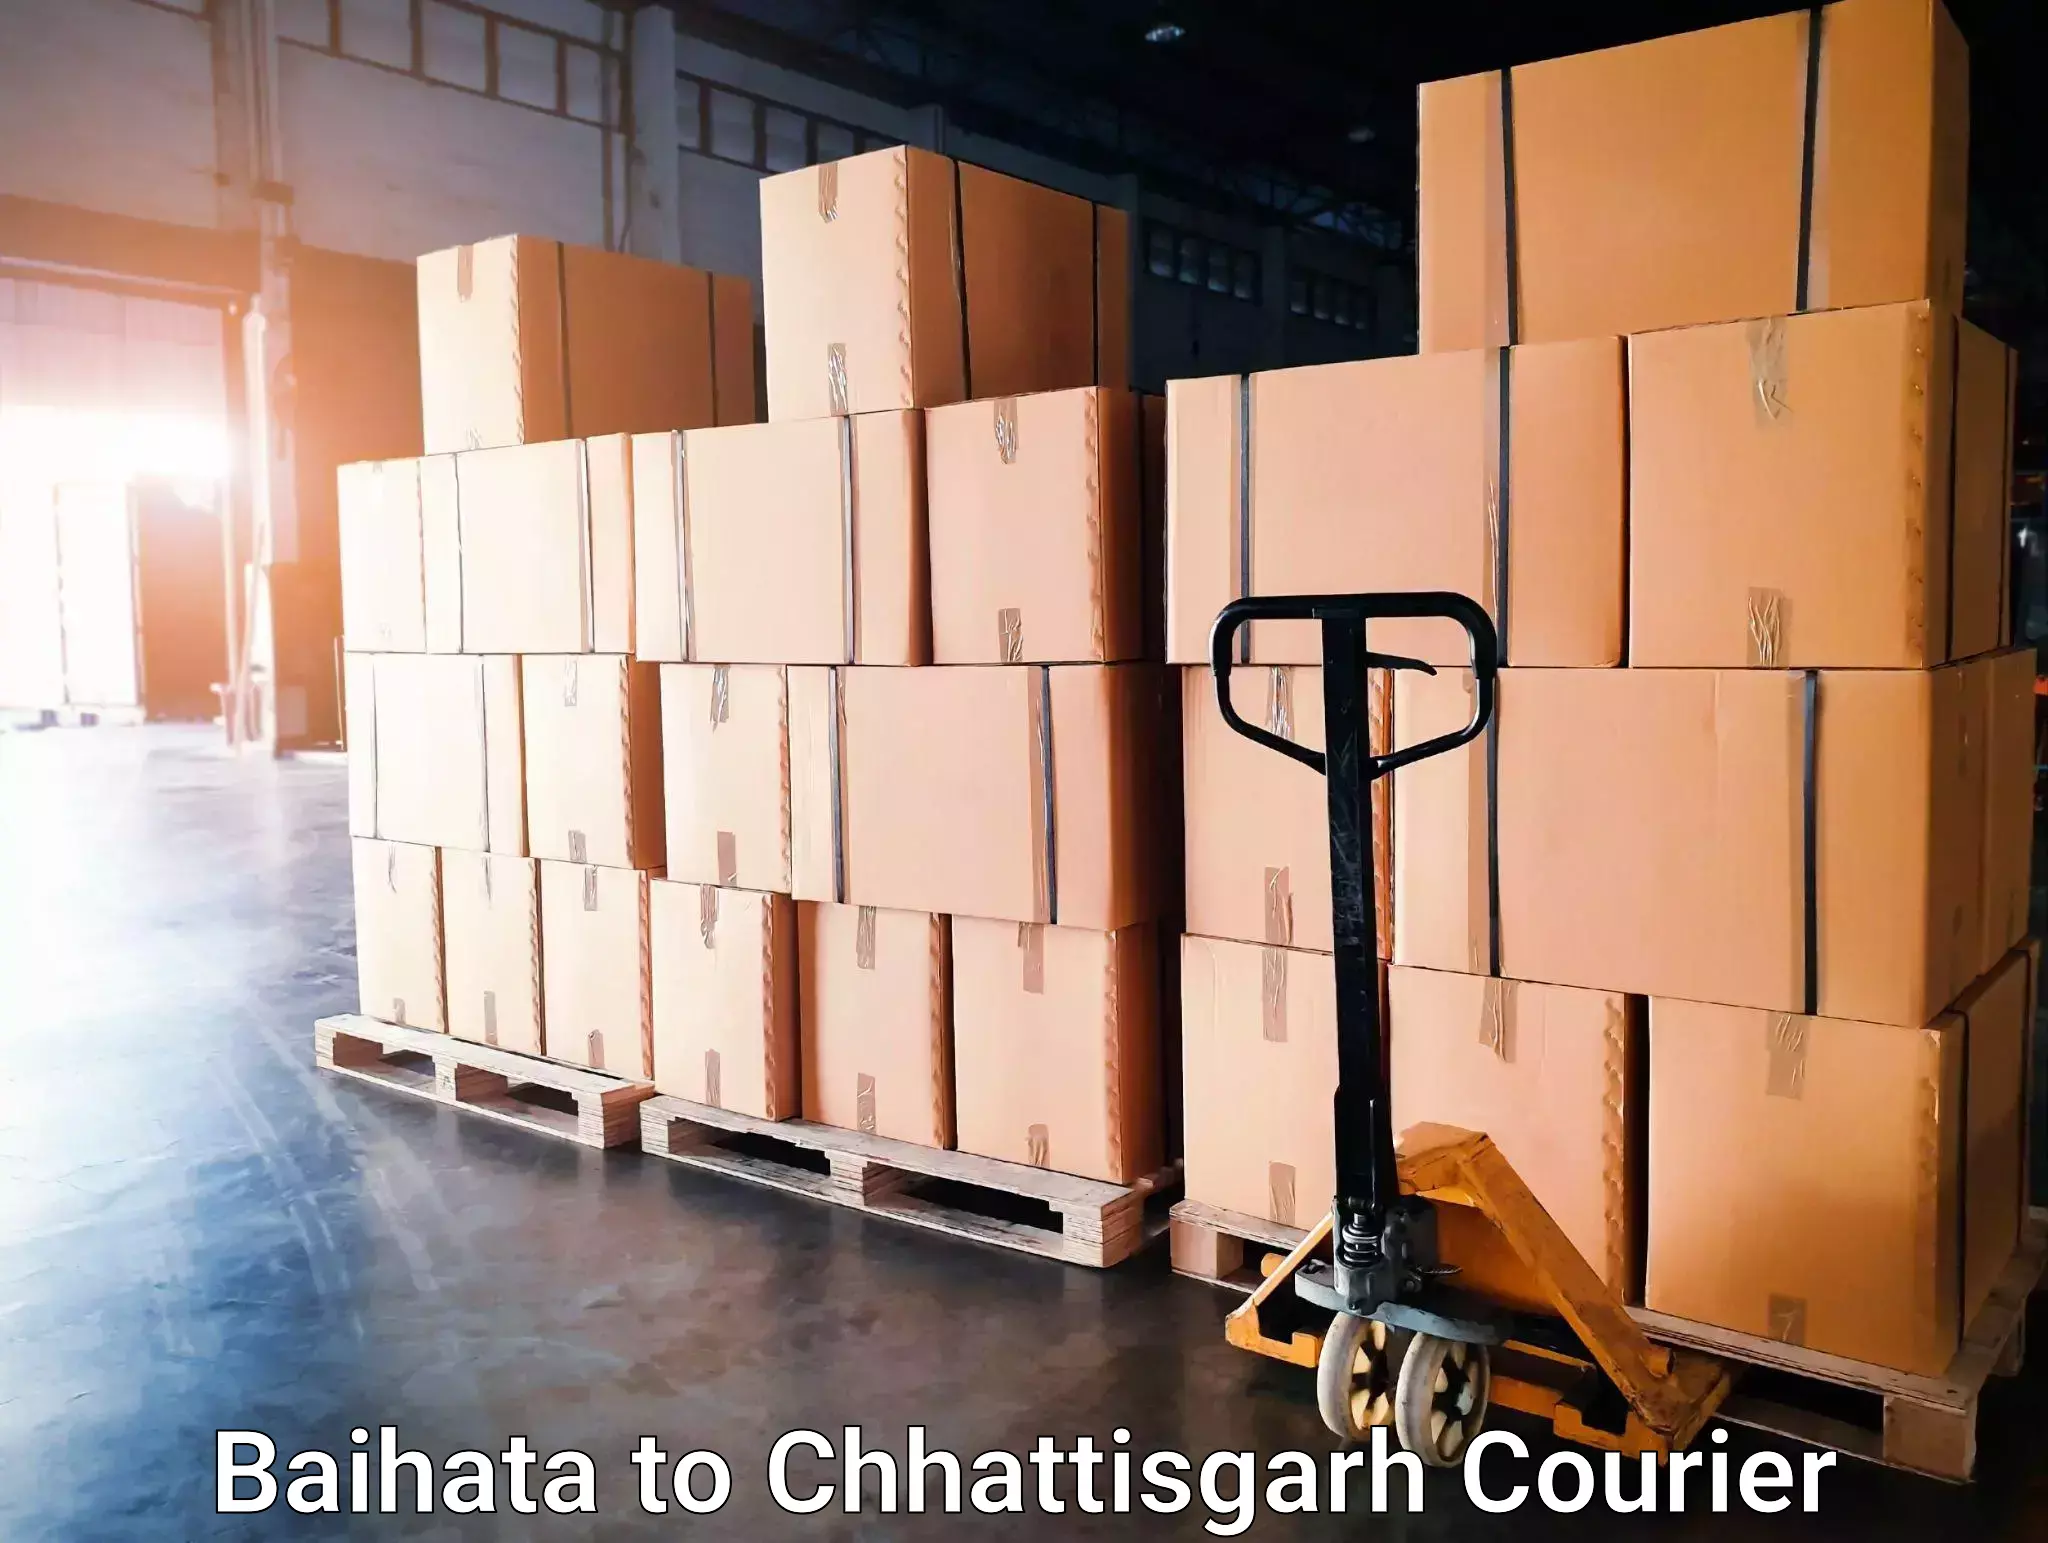 Courier insurance in Baihata to Mahasamund